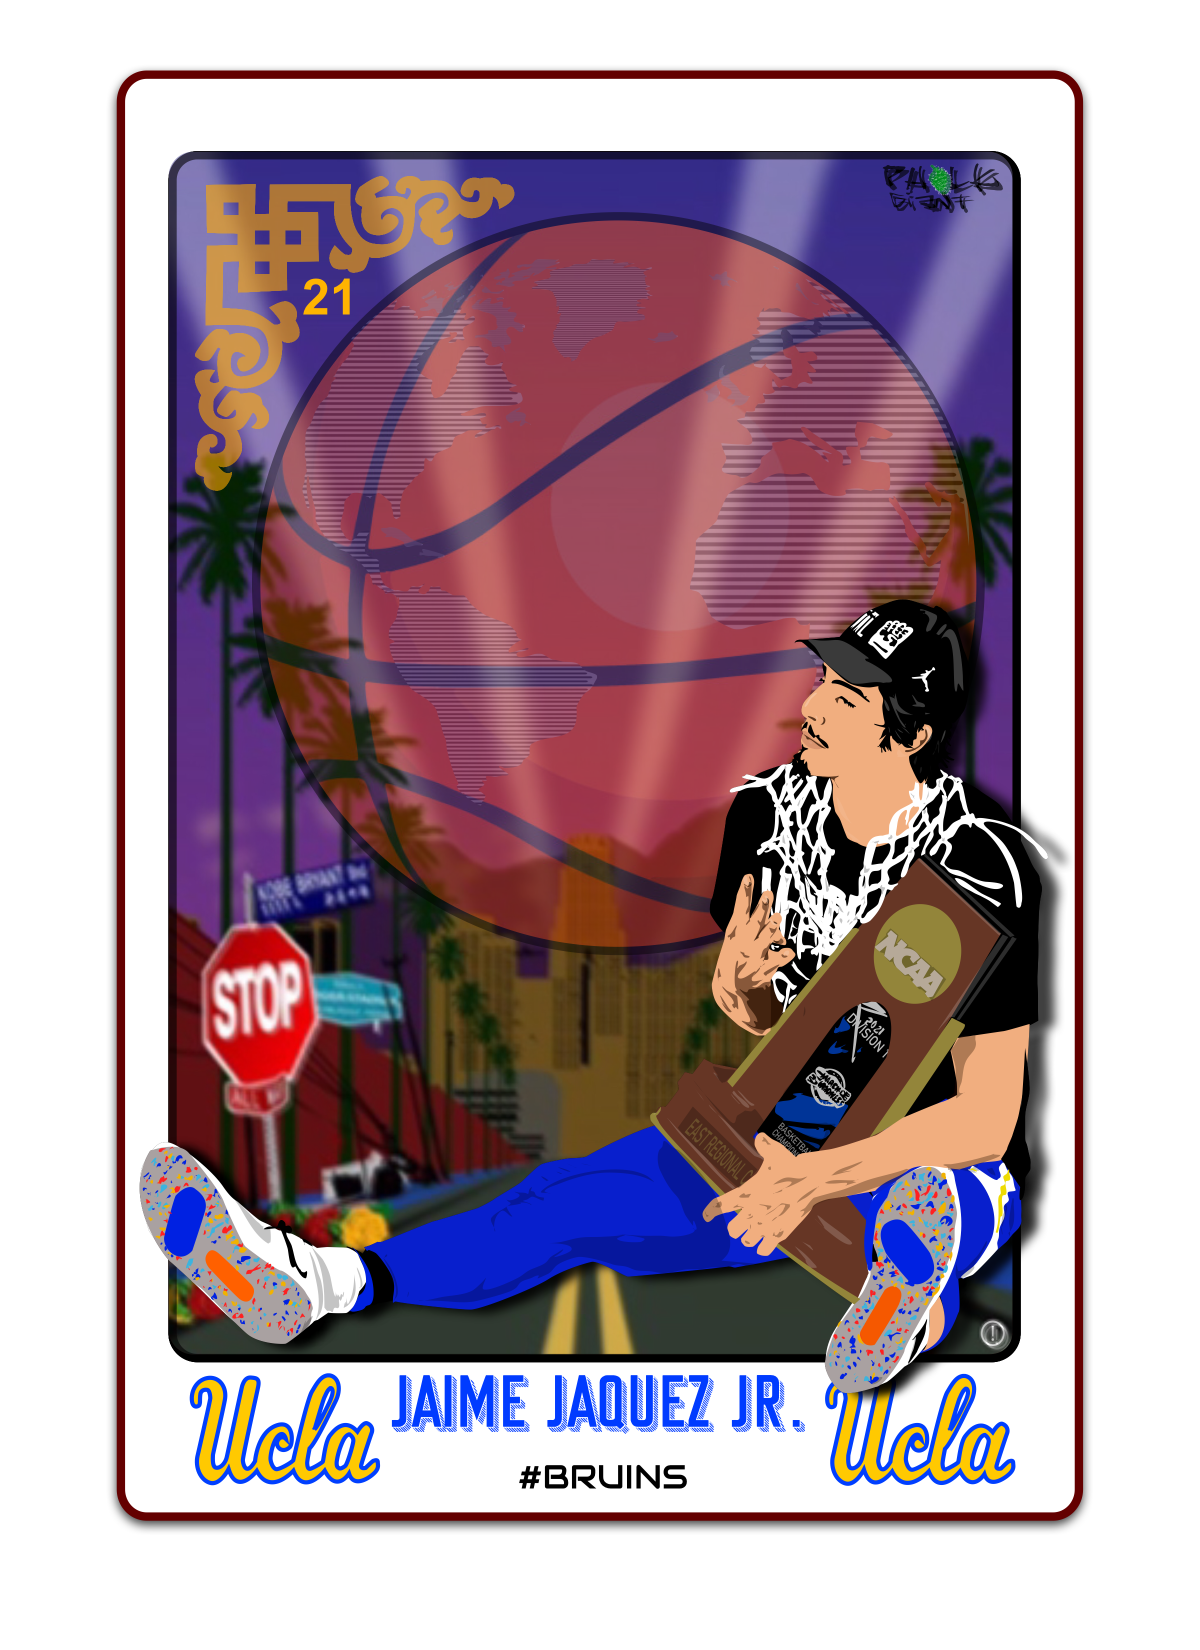 A Jaime Jaquez Jr. trading card